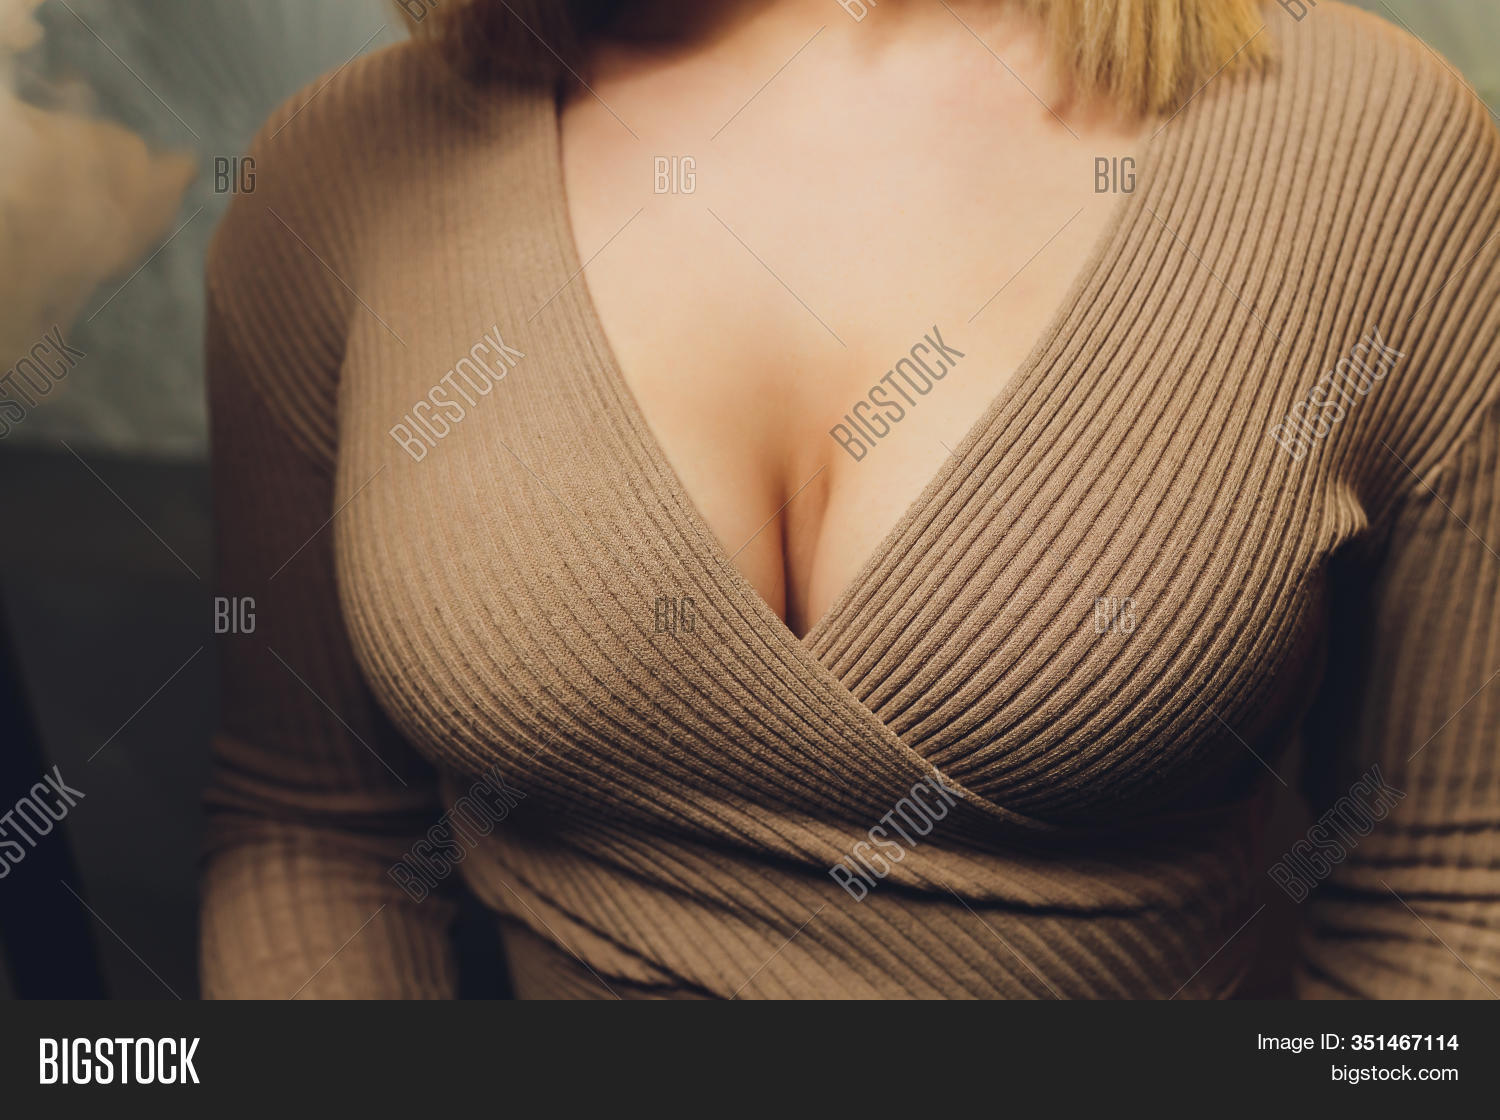 chae smith add photo large beautiful breast